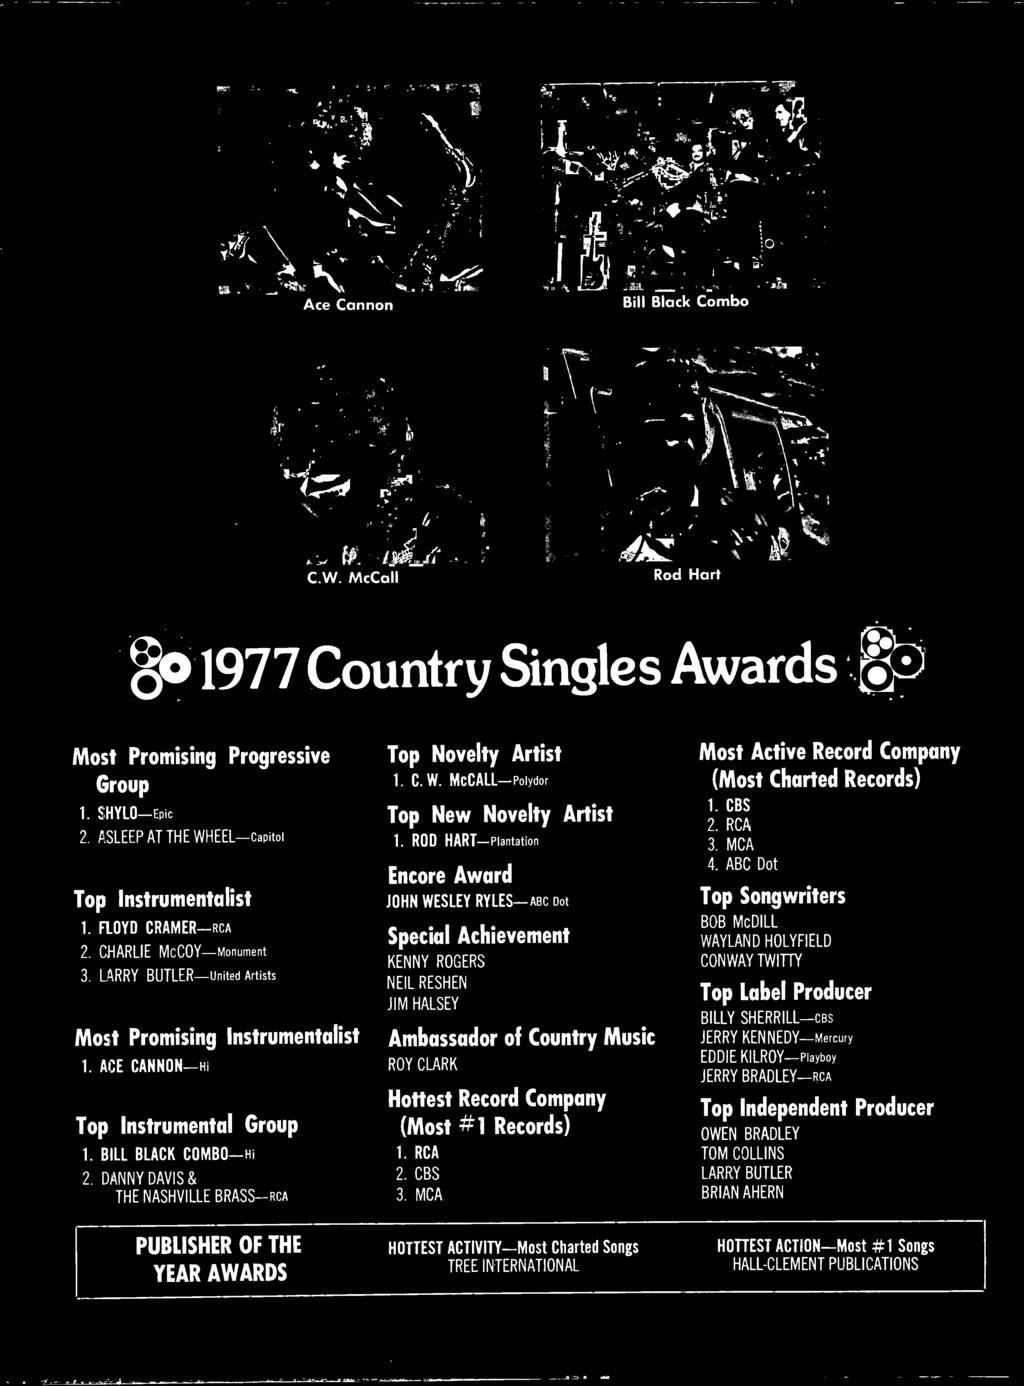 # Records). RCA 2. CBS 3. MCA Most Active Record Company (Most Charted Records). CBS 2. RCA 3. MCA 4.